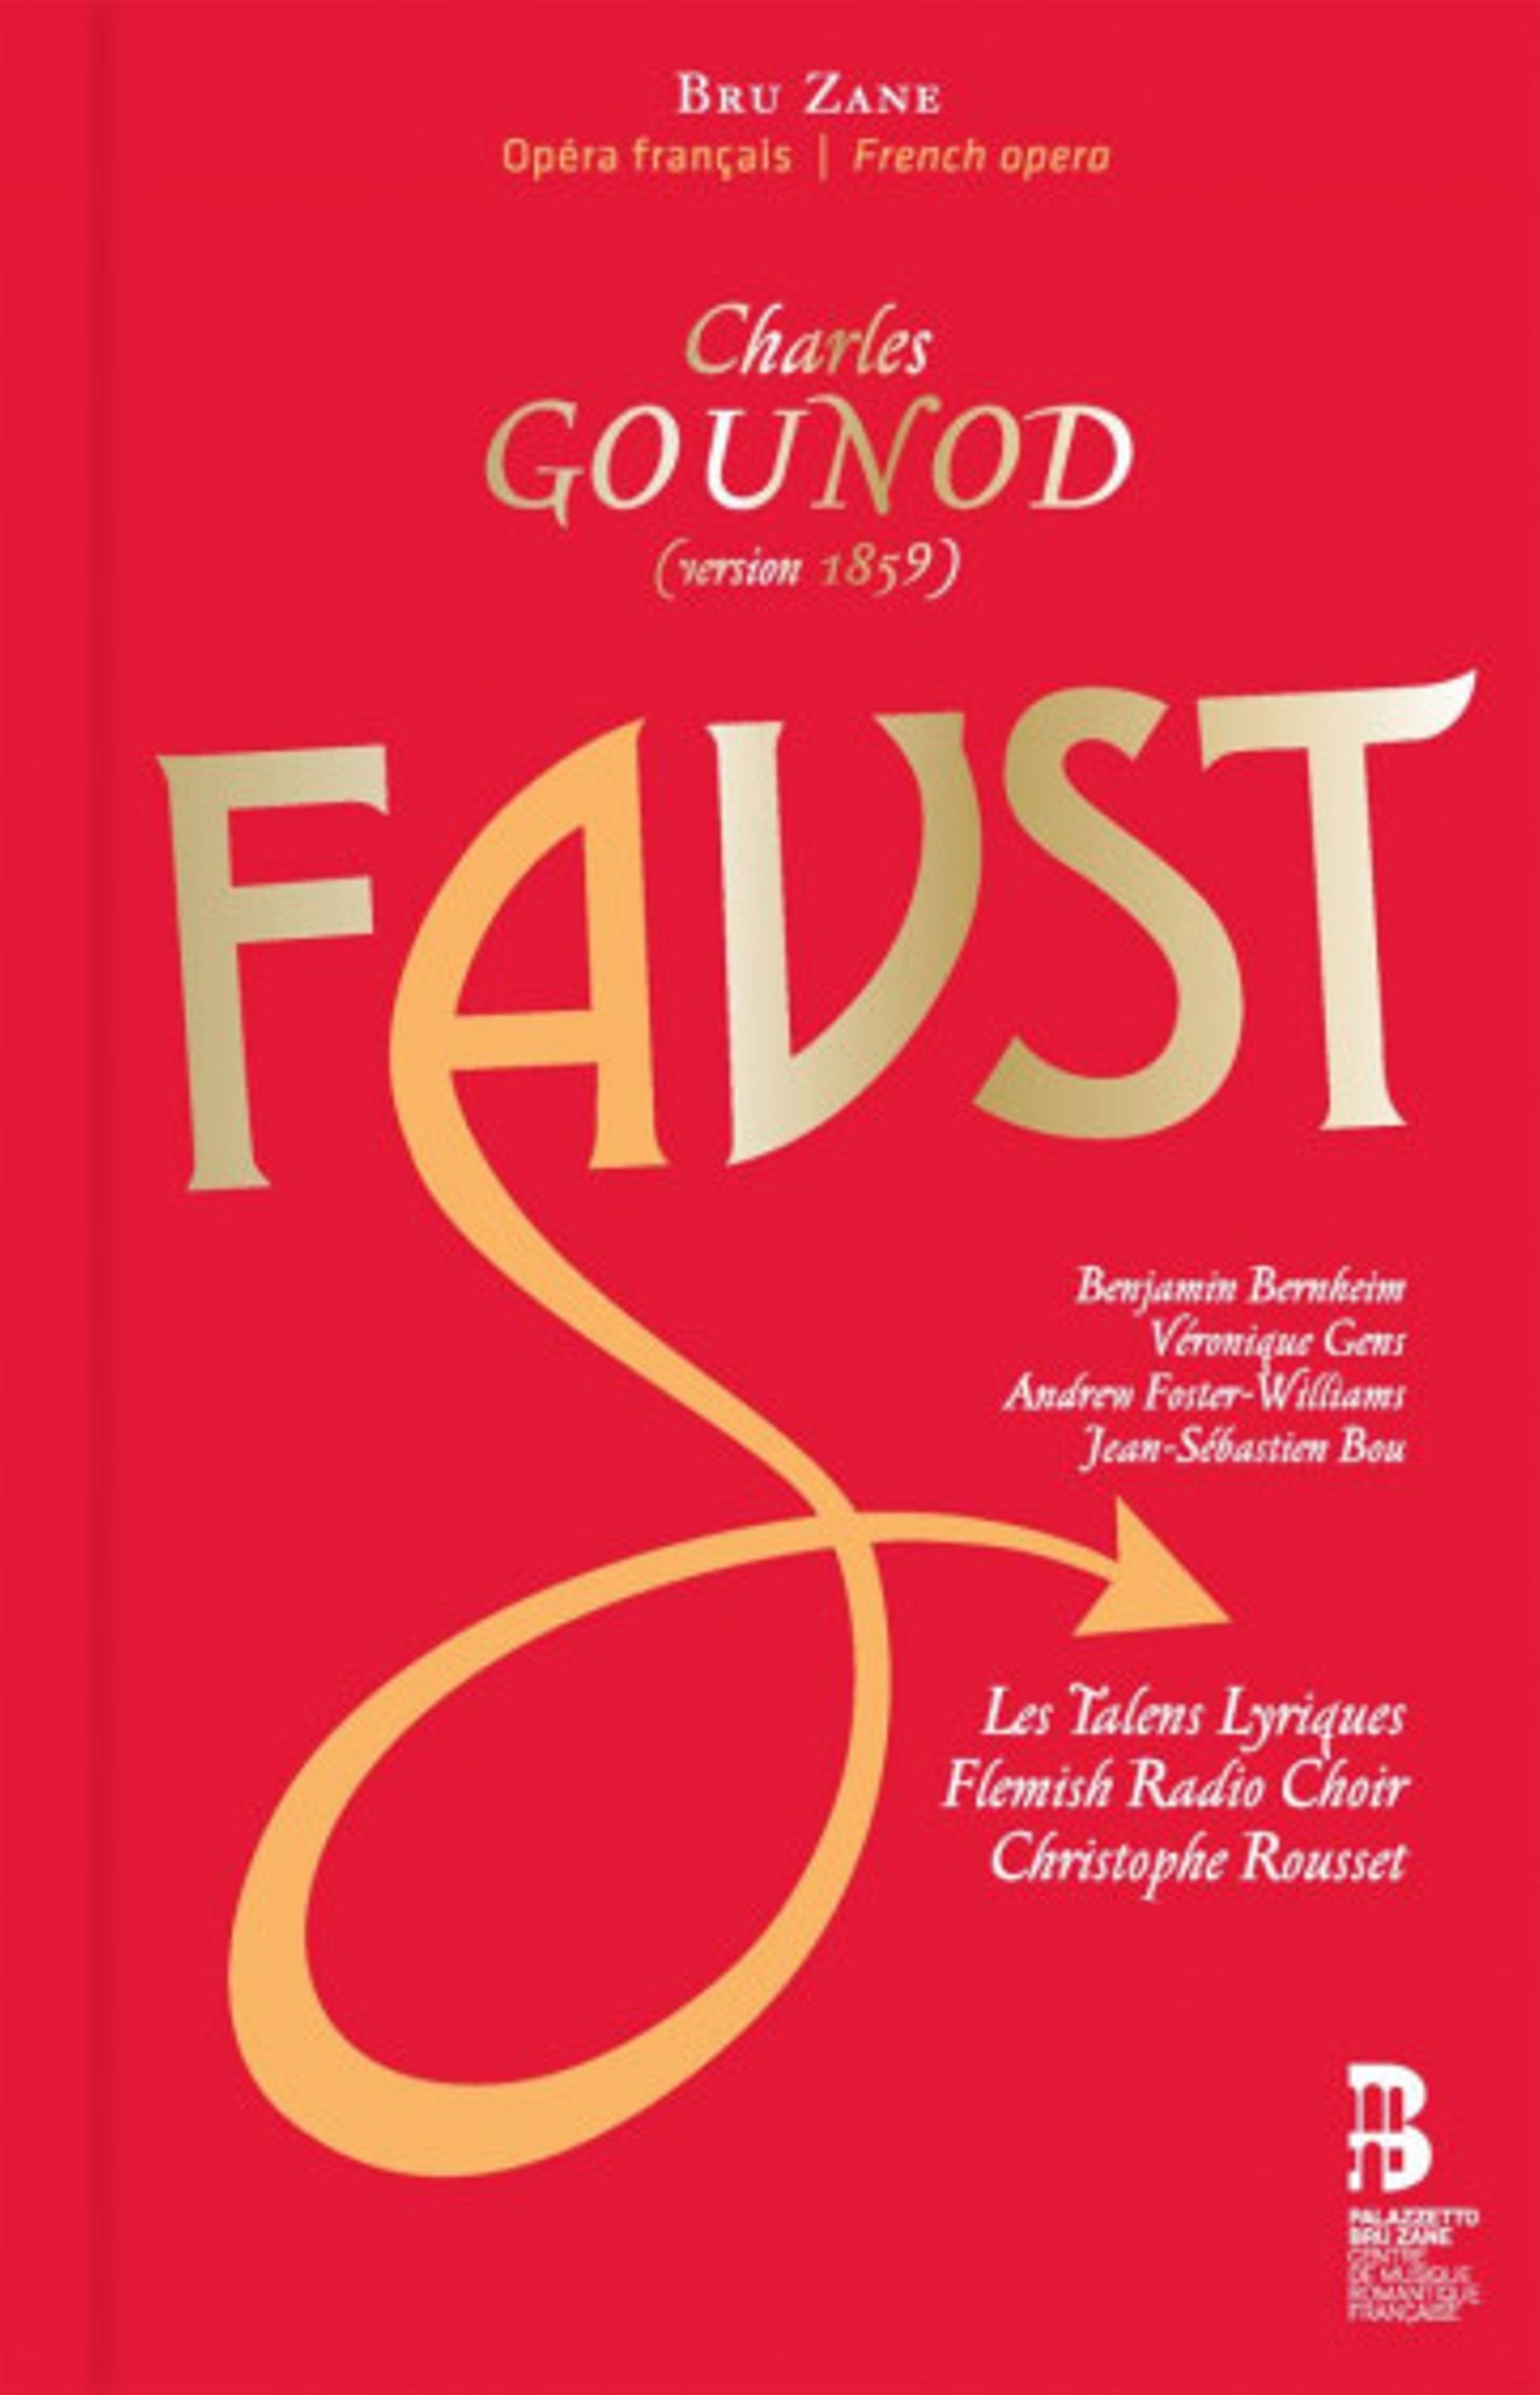 Charles Gounod - Faust (1859) Palazzetto Bru Zane